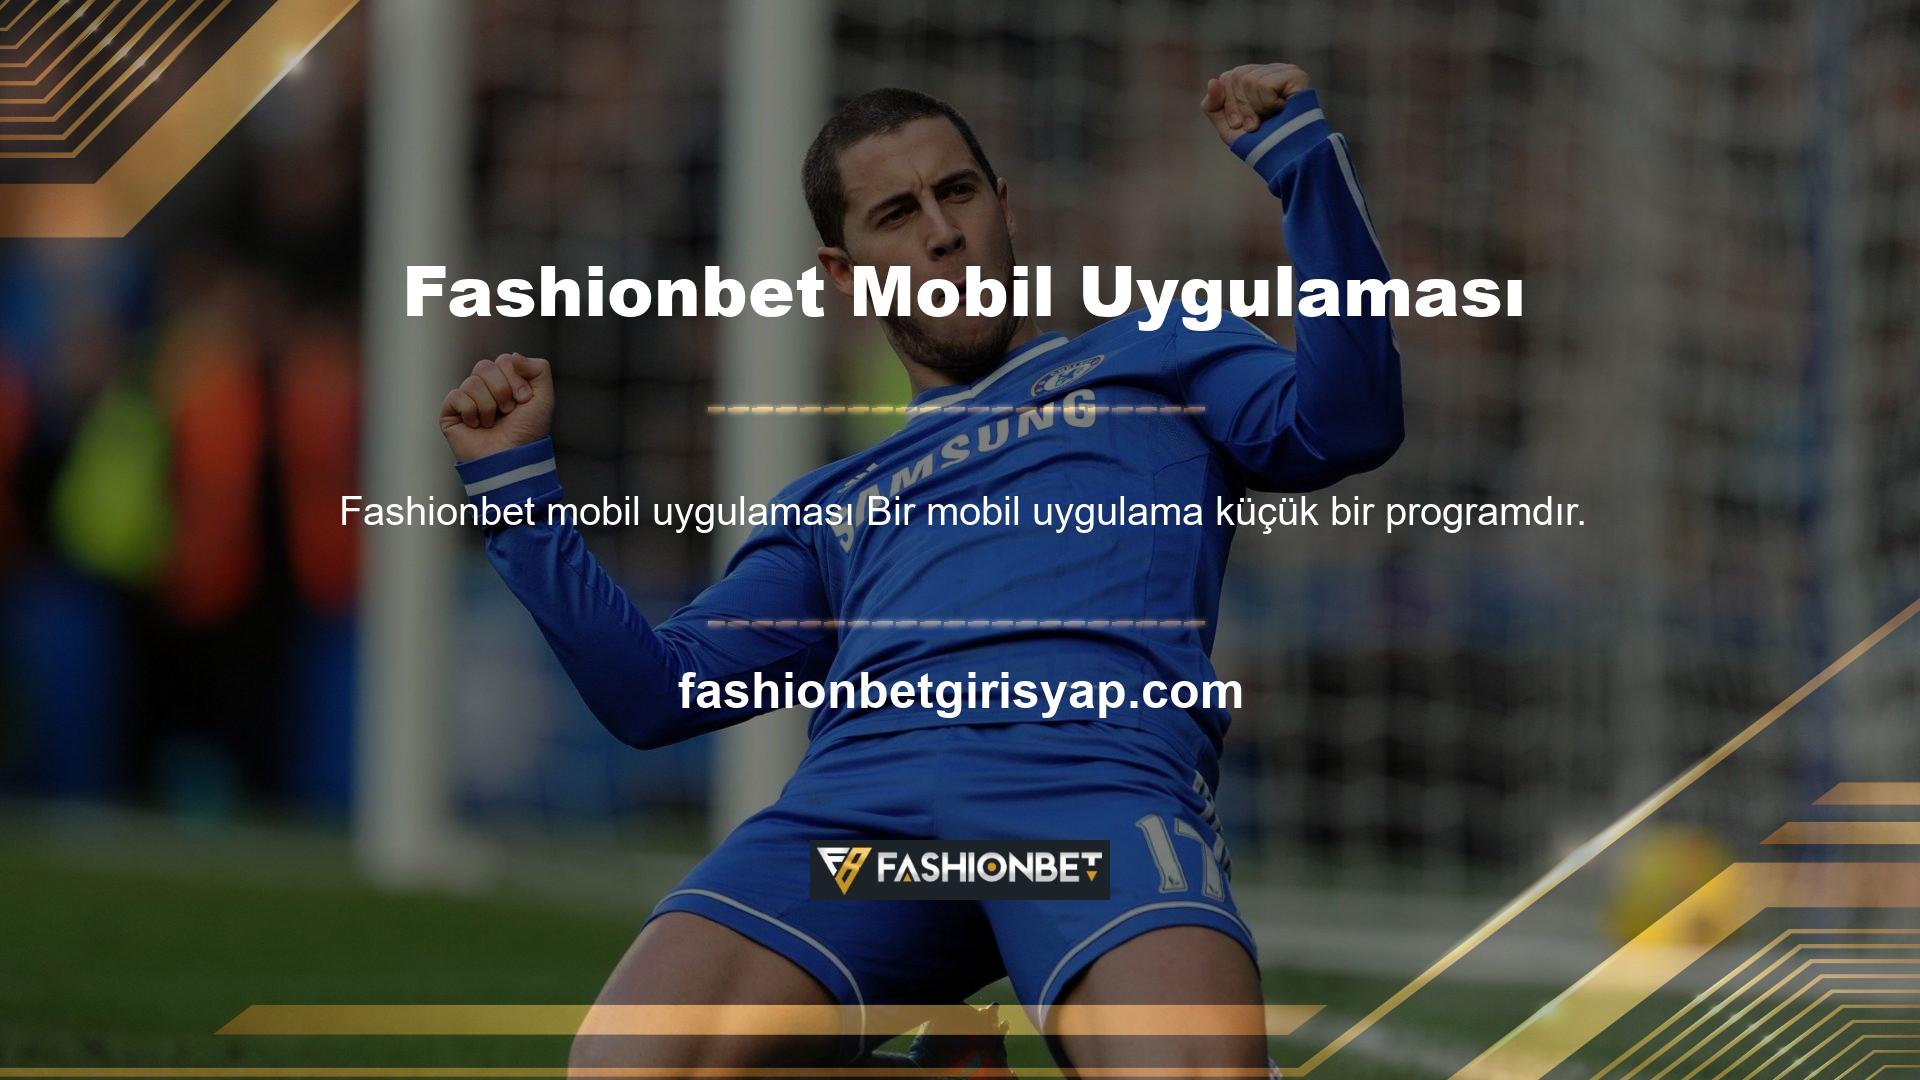 Fashionbet mobil uygulaması